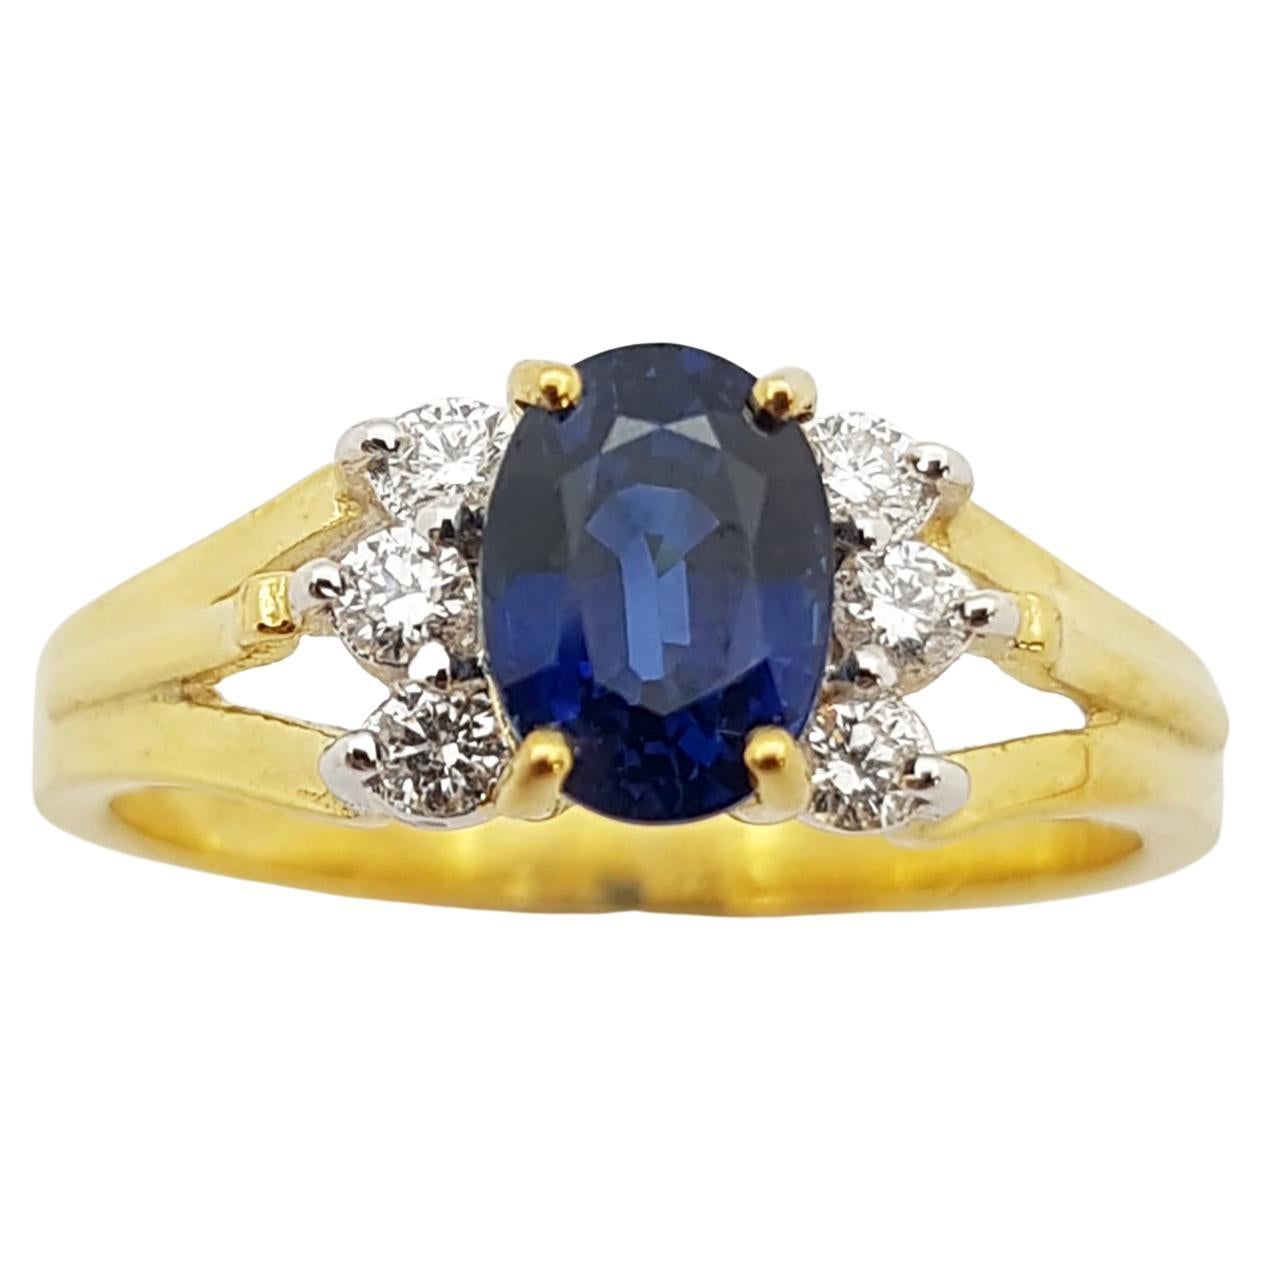 Blue Sapphire with Diamond Ring set in 18 Karat Gold Settings